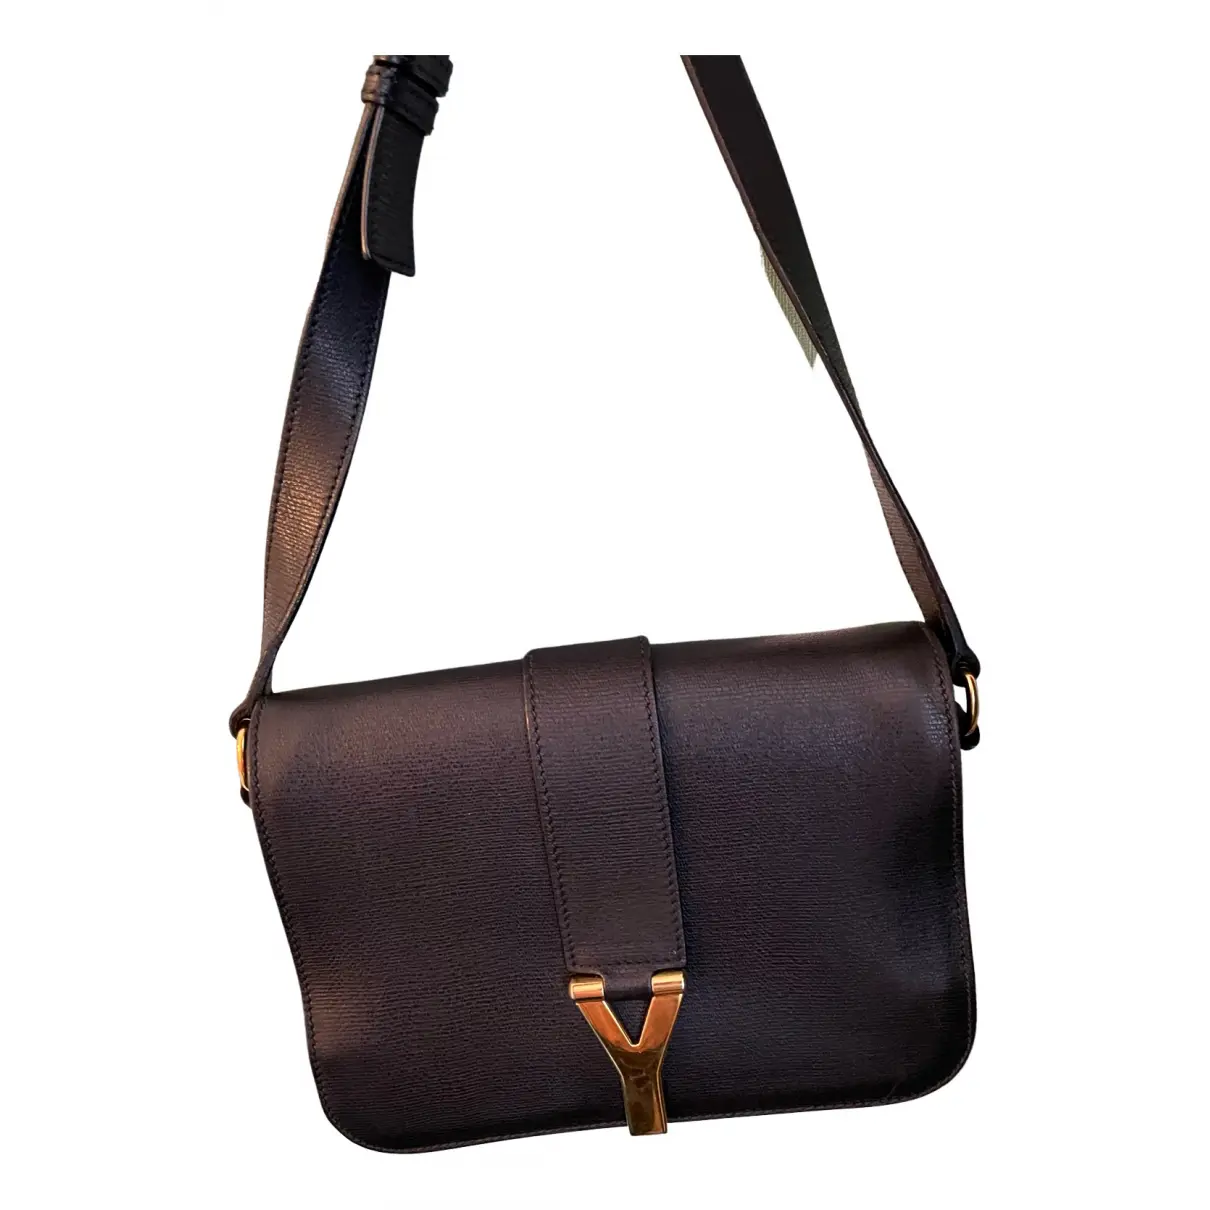 Leather bag Yves Saint Laurent